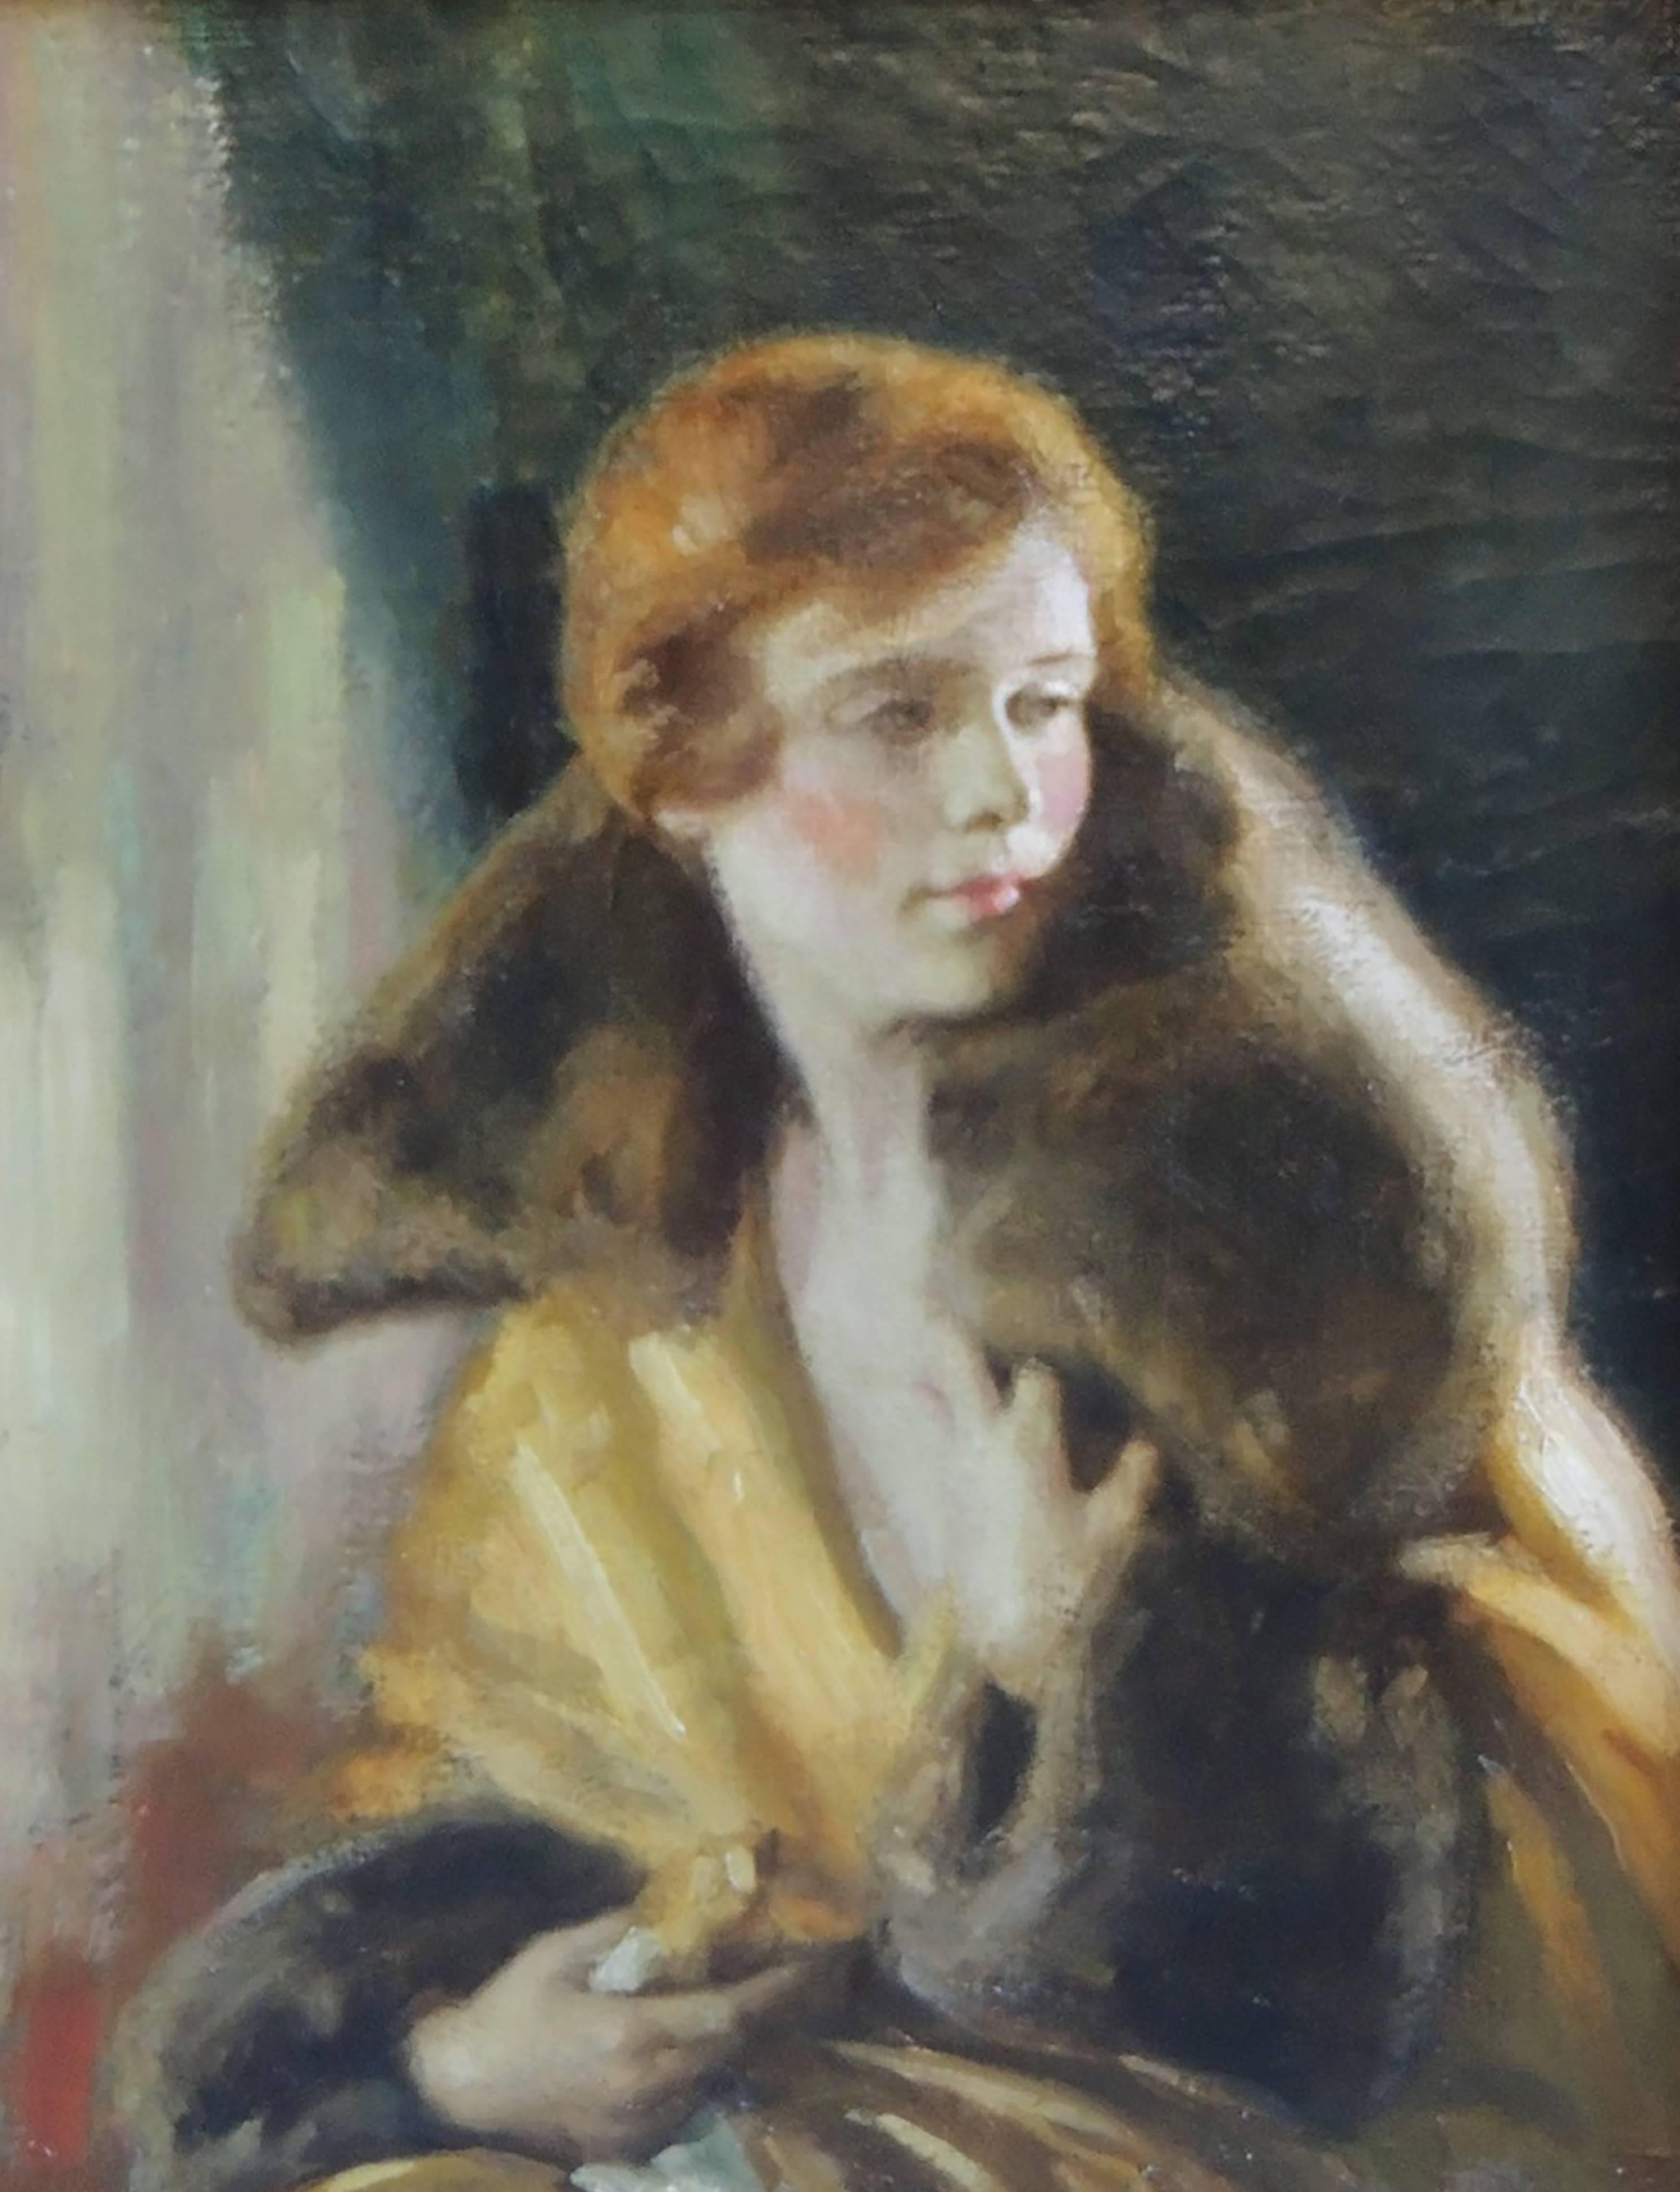 Edna Crompton Portrait Painting - February 1925 Redbook Magazine Cover